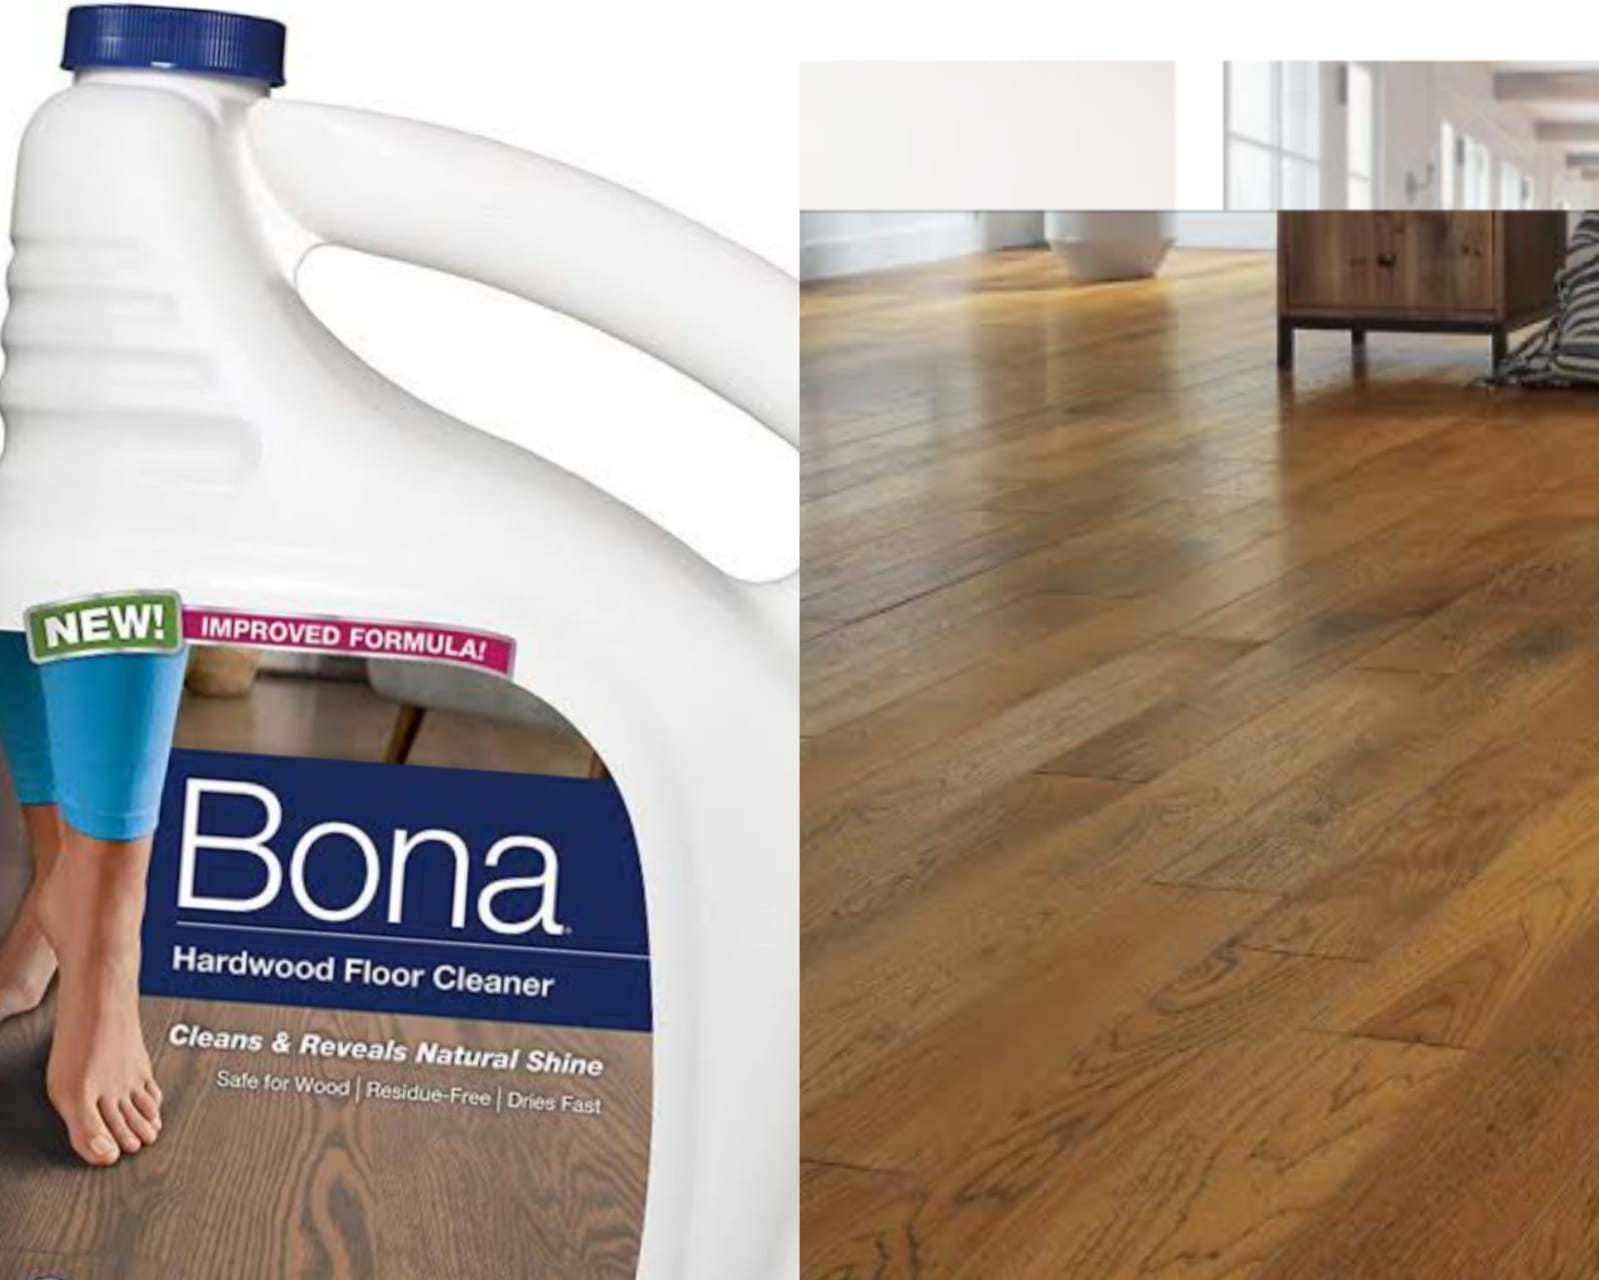 Does Bona Hardwood Floor Cleaner Kill Germs